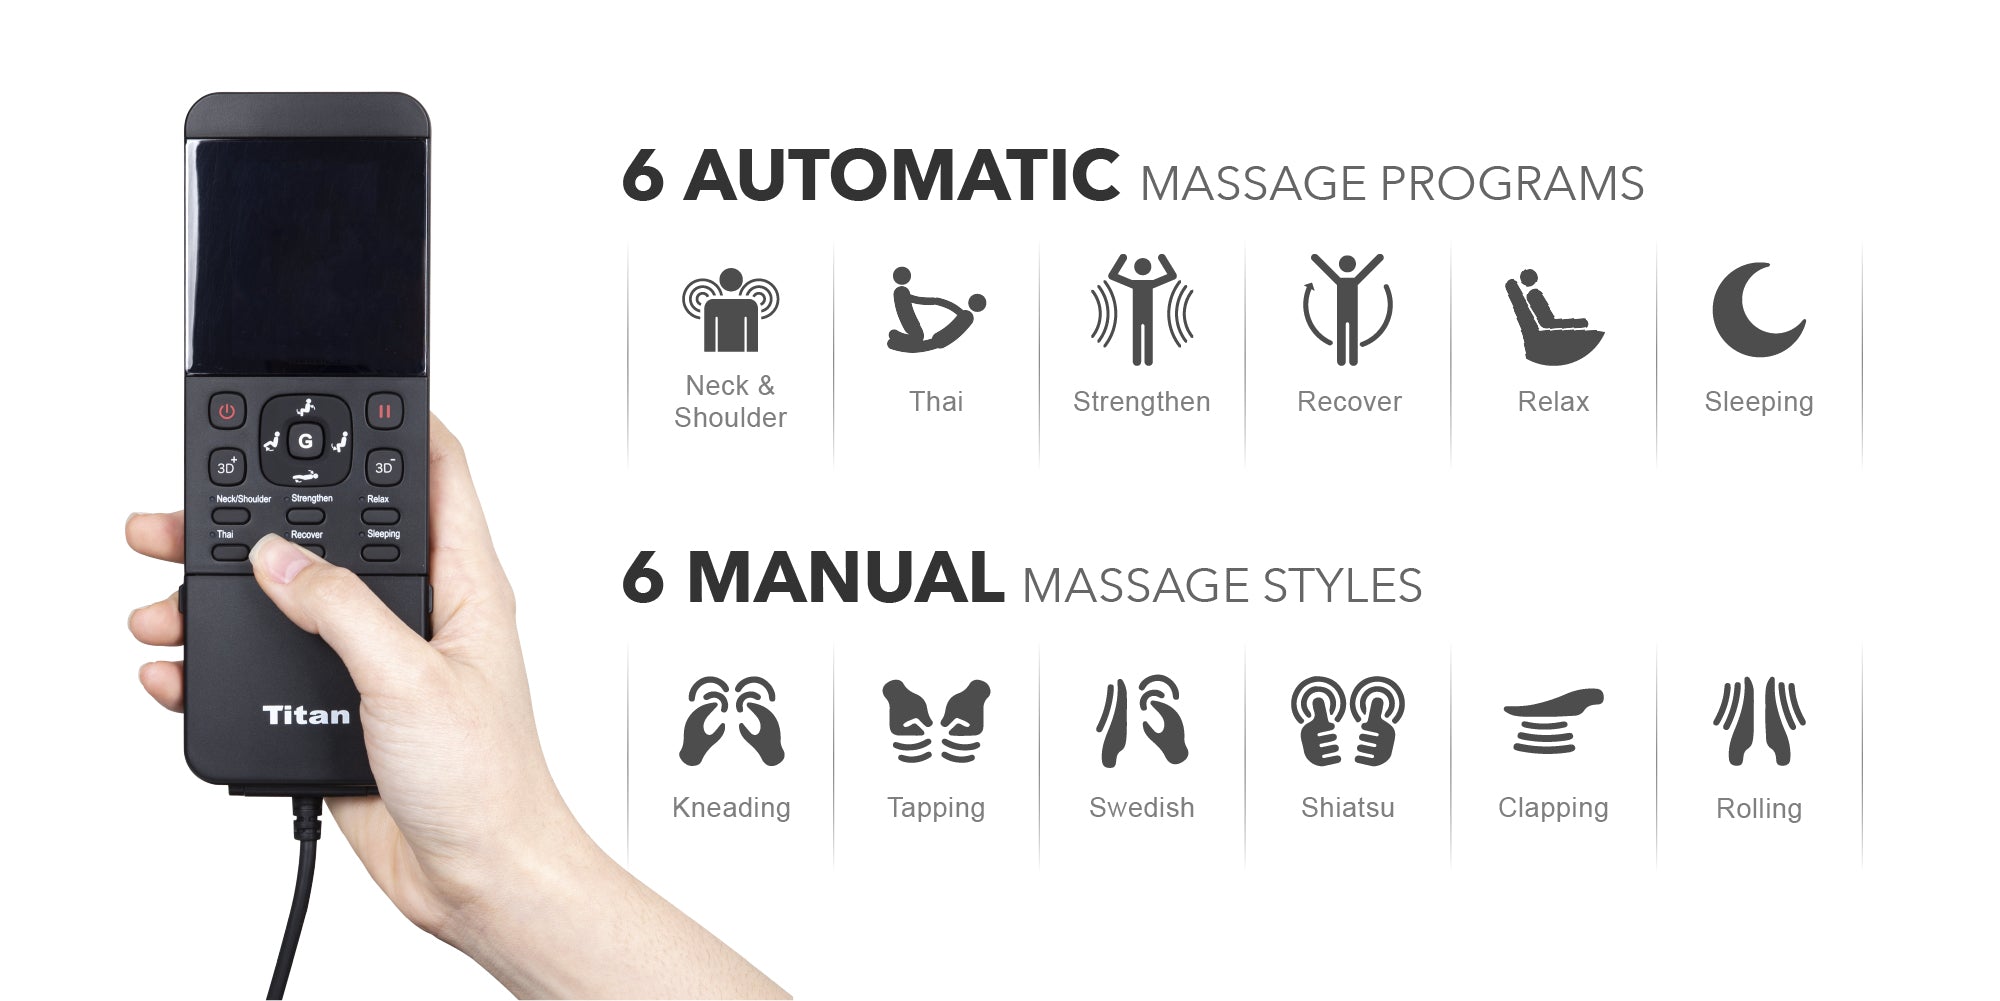 6 Auto massage and 6 manual massage programs